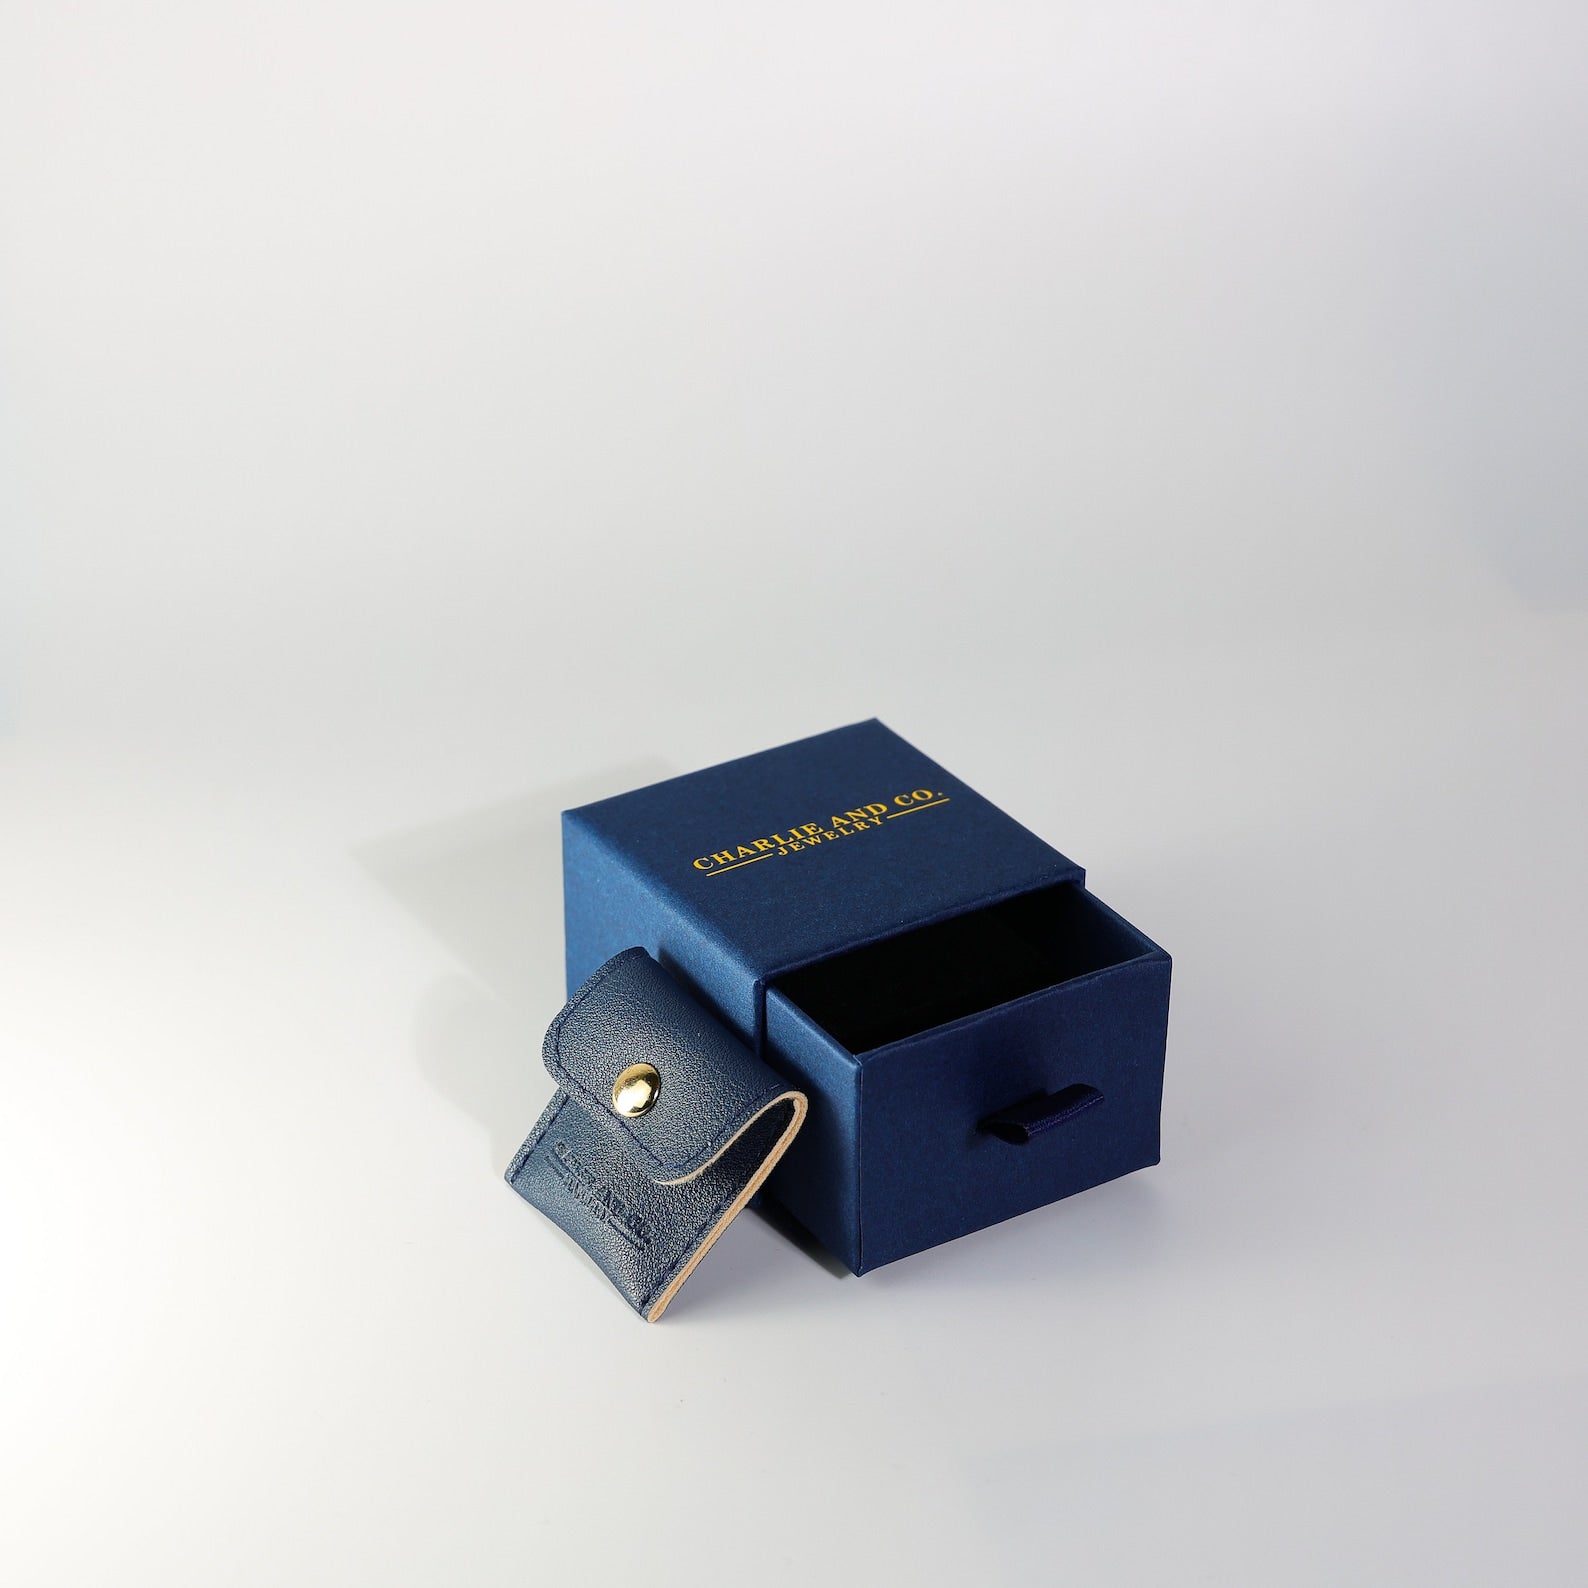 Gold Heart-Shaped Letter V Pendant | A-Z Pendants - Charlie & Co. Jewelry